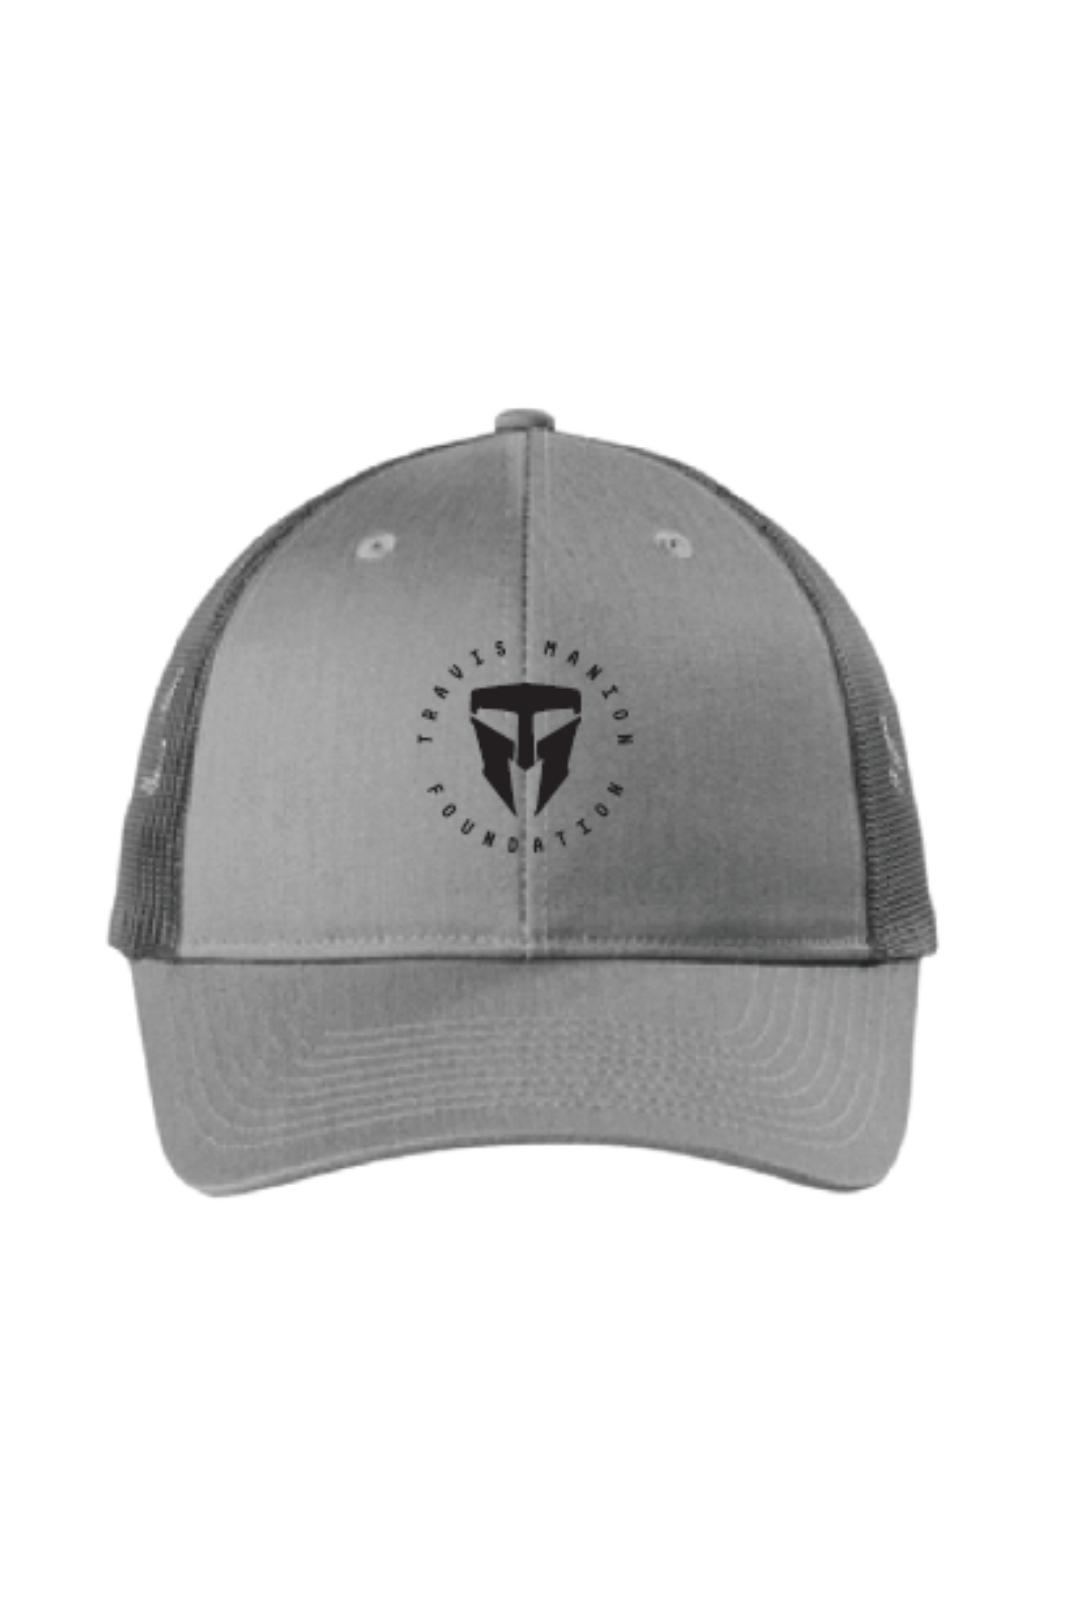 Snapback Trucker Hat with Black TMF logo